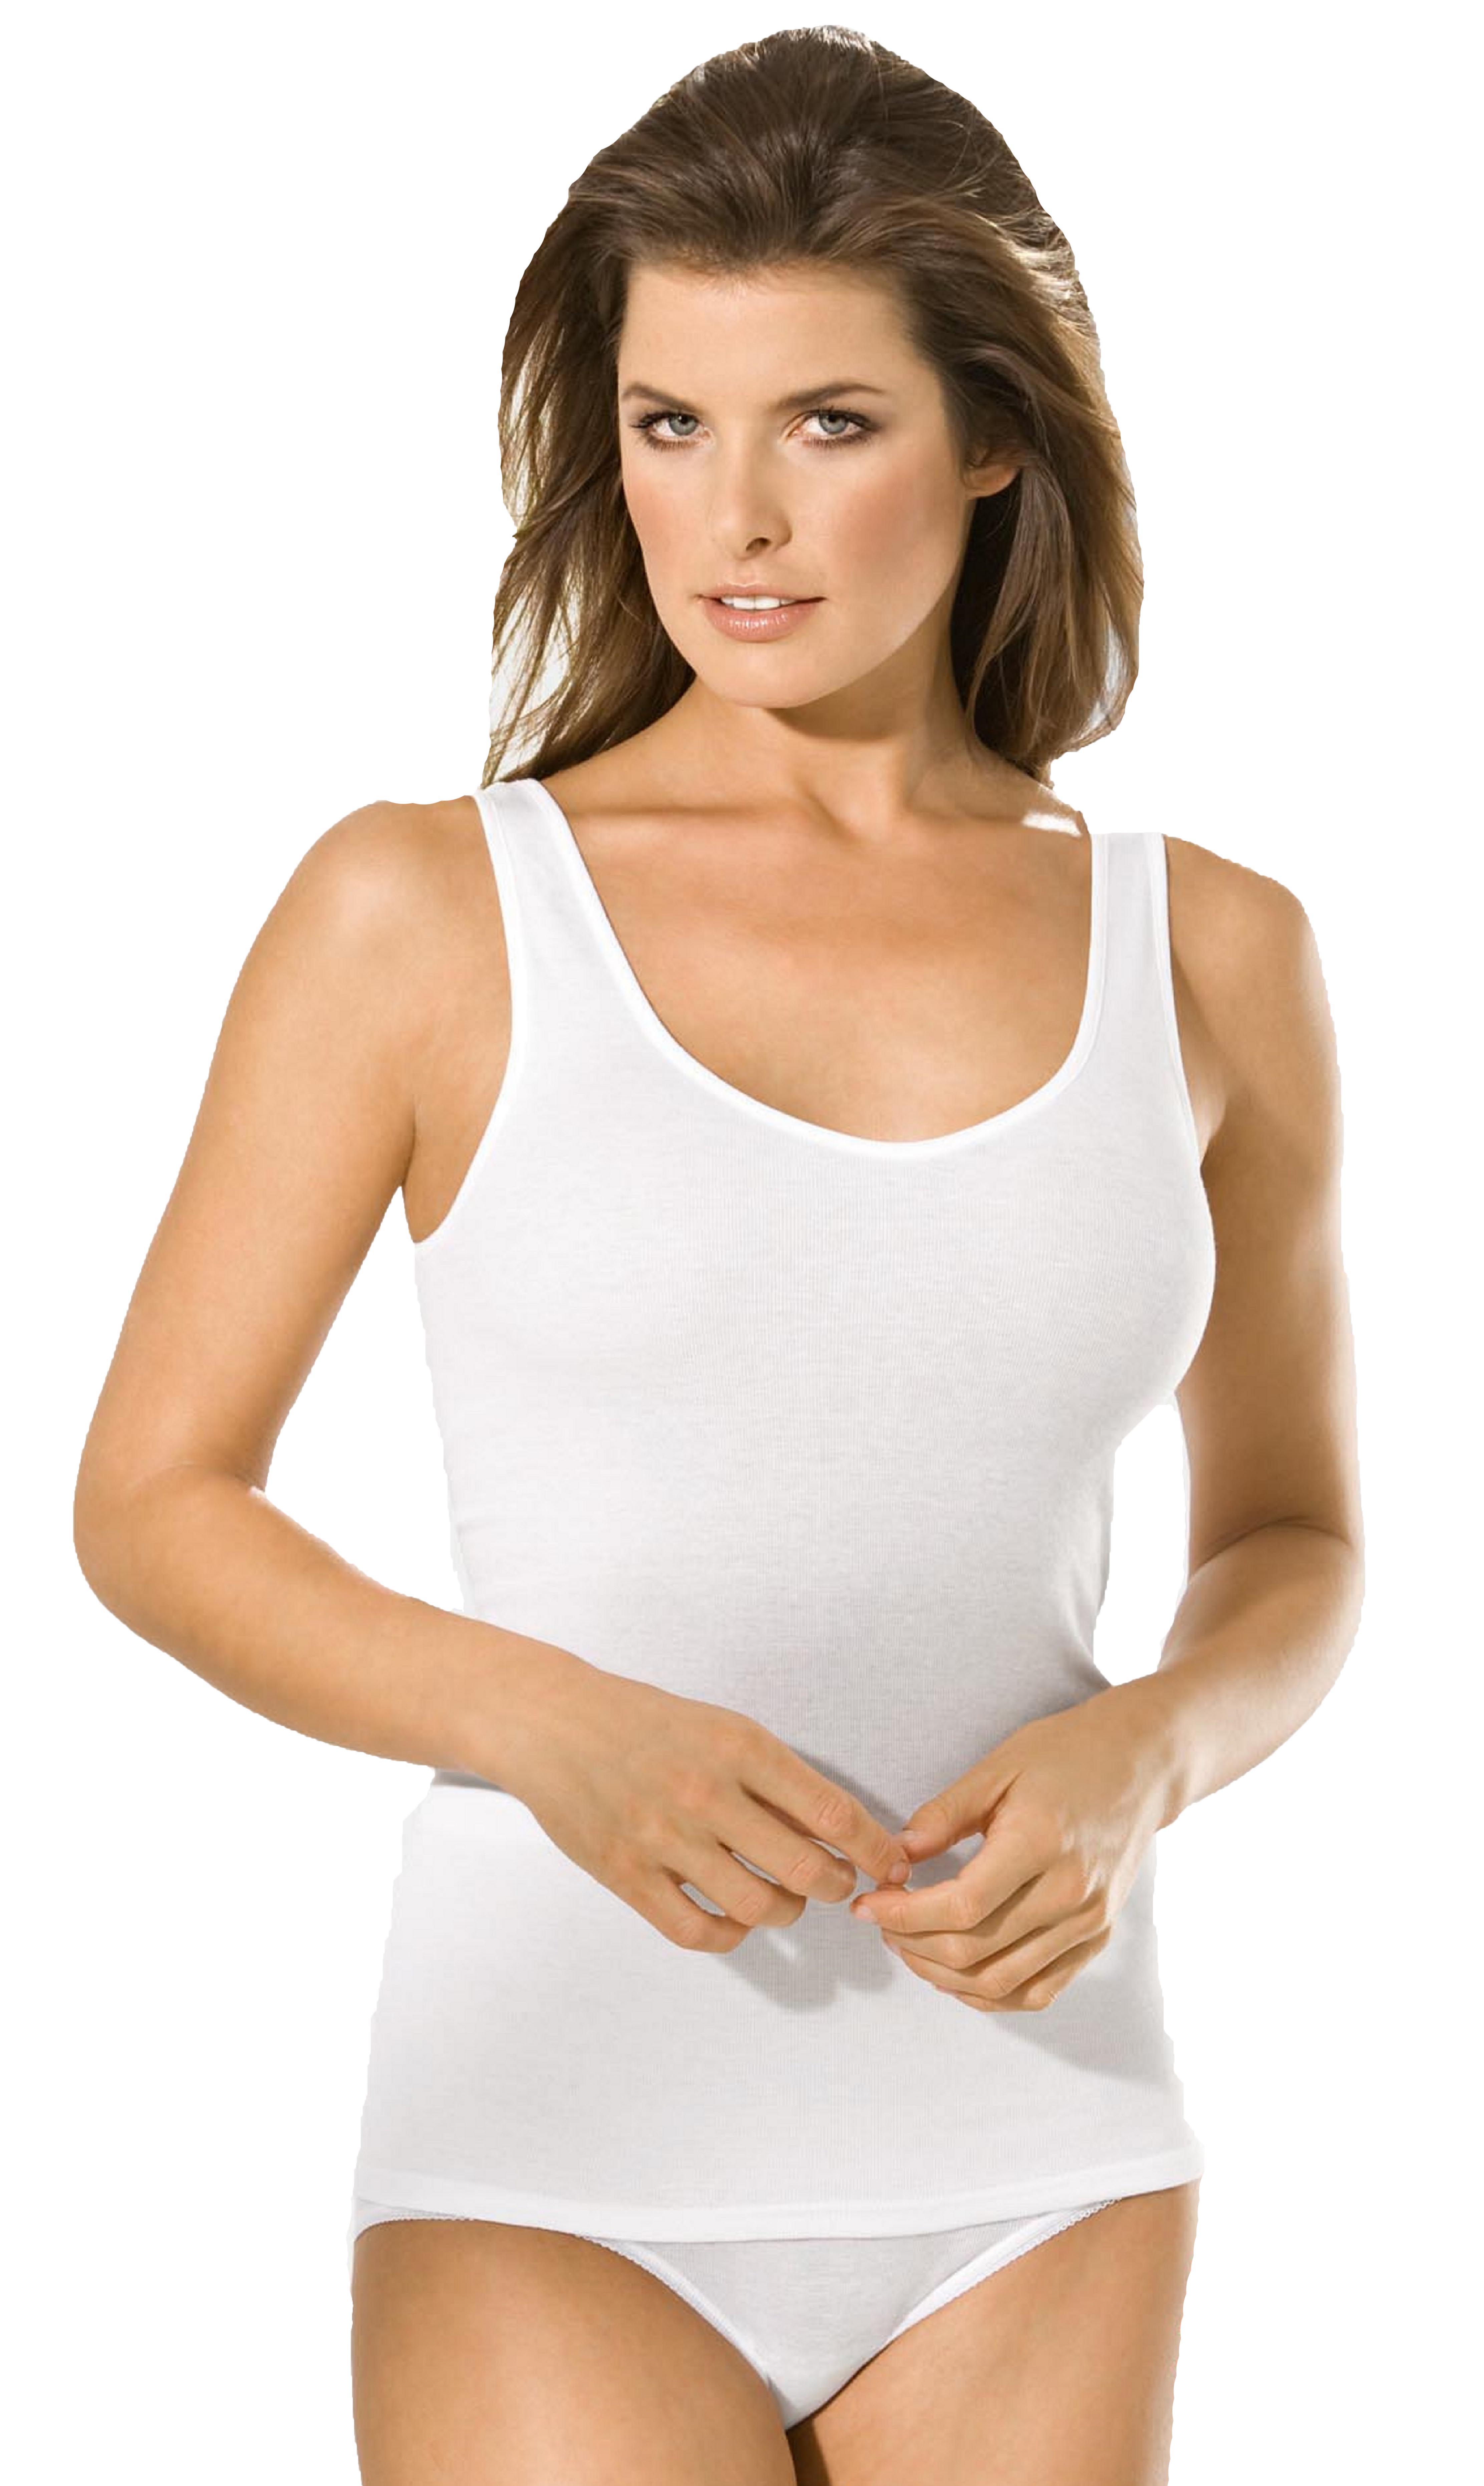 5 Piece BASIC Undershirt Camisole Vest Set Women Colour: white Size: 38-5